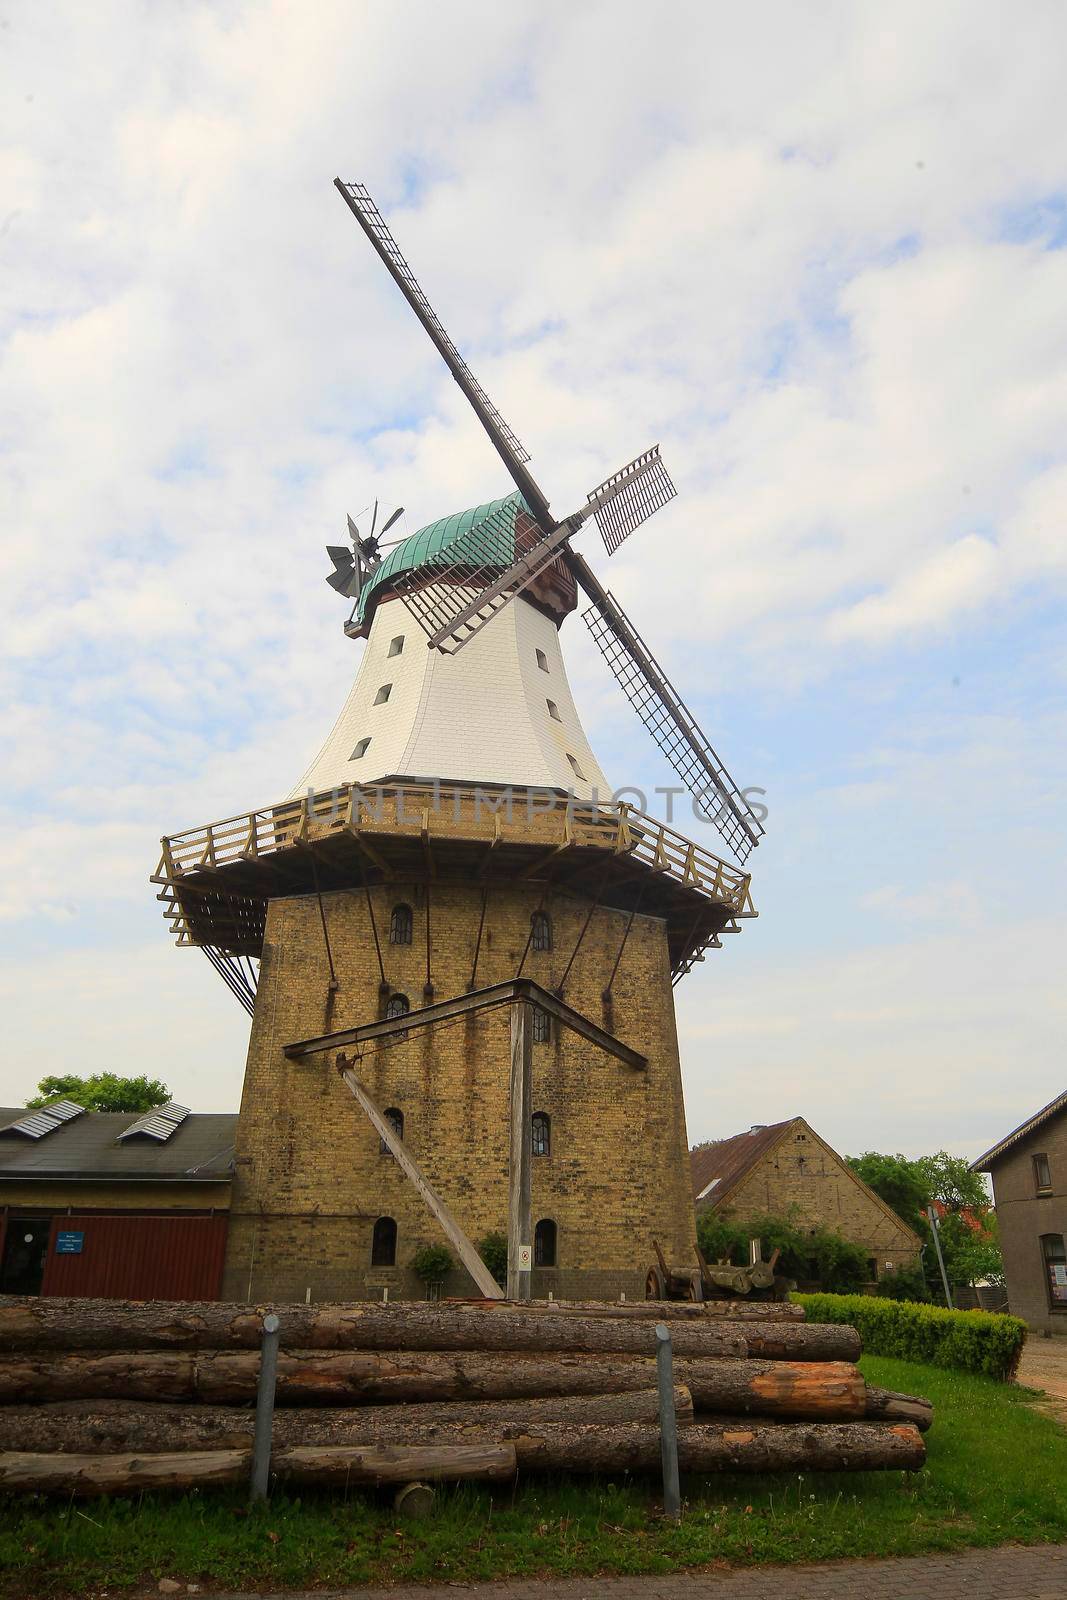 The historical Windmill Amanda in Kappeln, Schleswig-Holstein, Germany, Europe